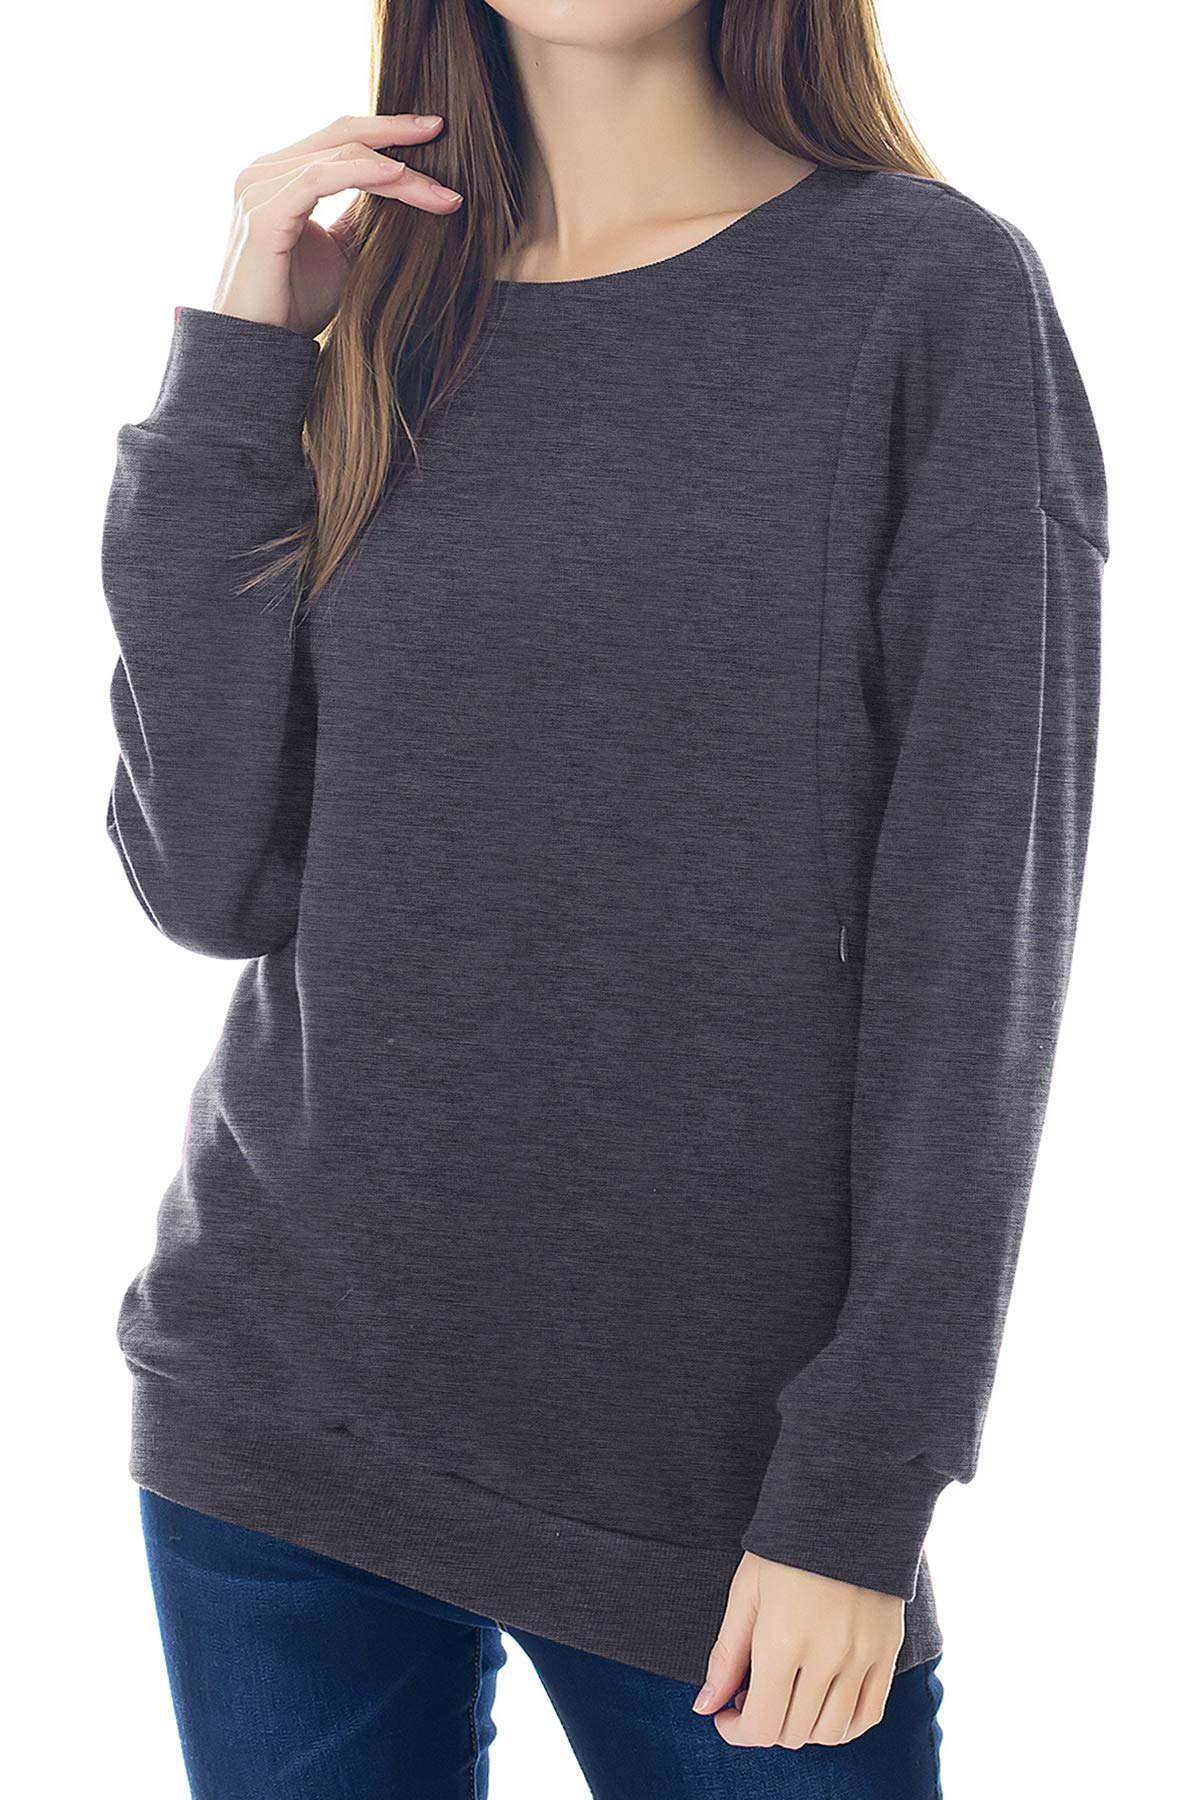 Smallshow Pflege Sweatshirt Langarm T-Shirt Bluse Stillen Pullover Tops Stillshirt Deep Grey 2XL